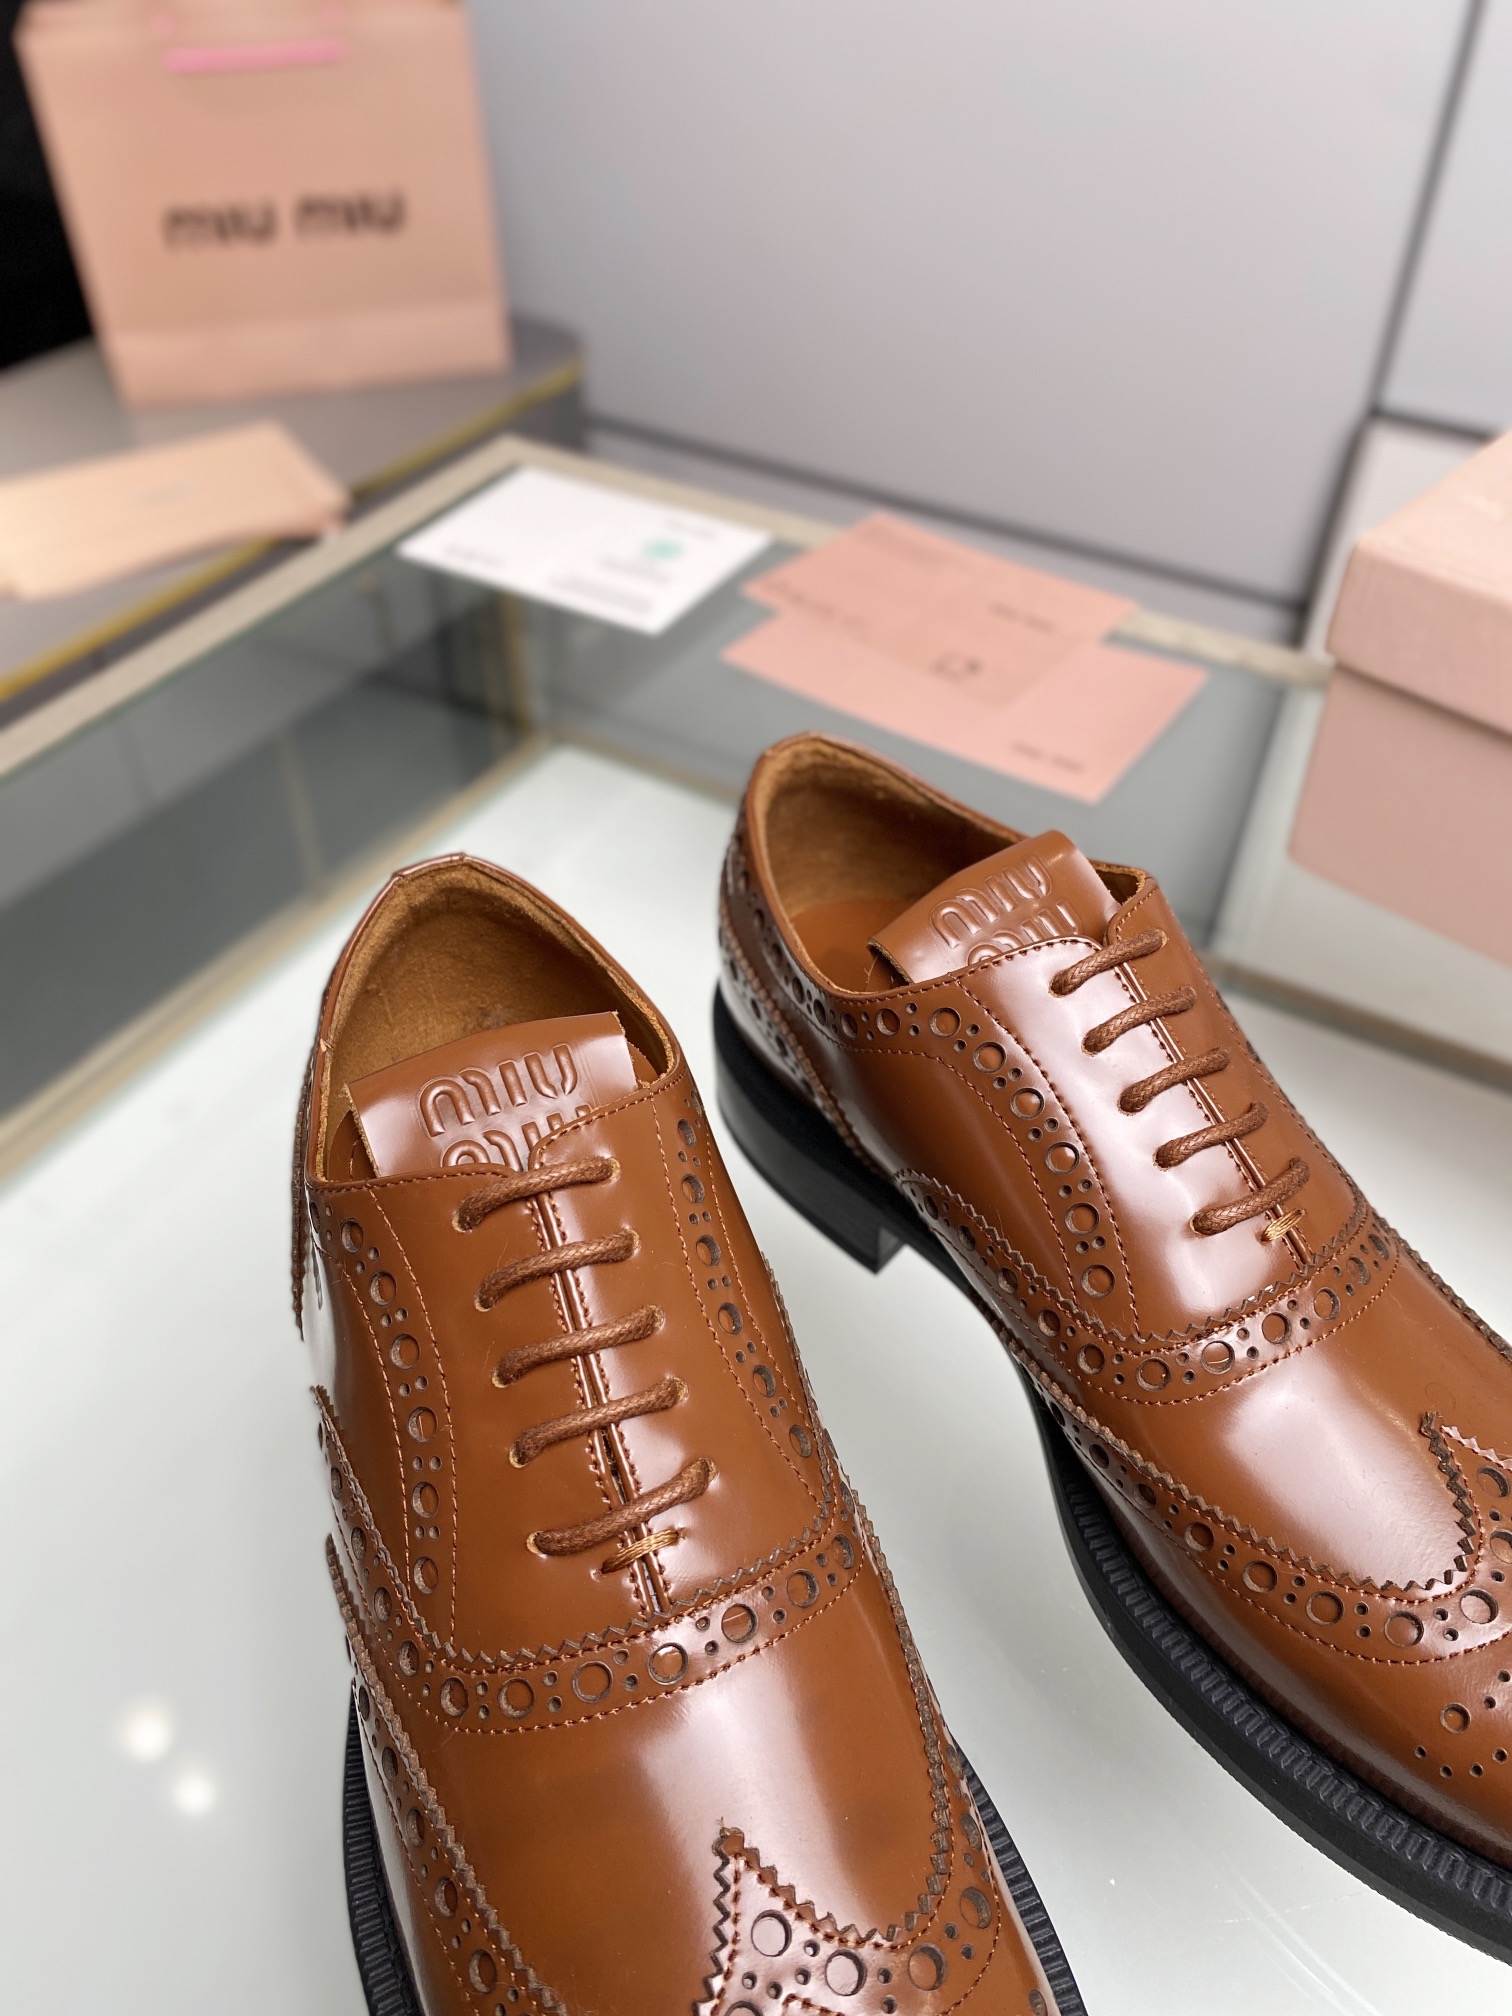 miumiu の スニーカーコピー 本革 ビジネス 革靴 軽量 歩きやすい 紳士靴 通気 シューズ  人気 ブラウン_2